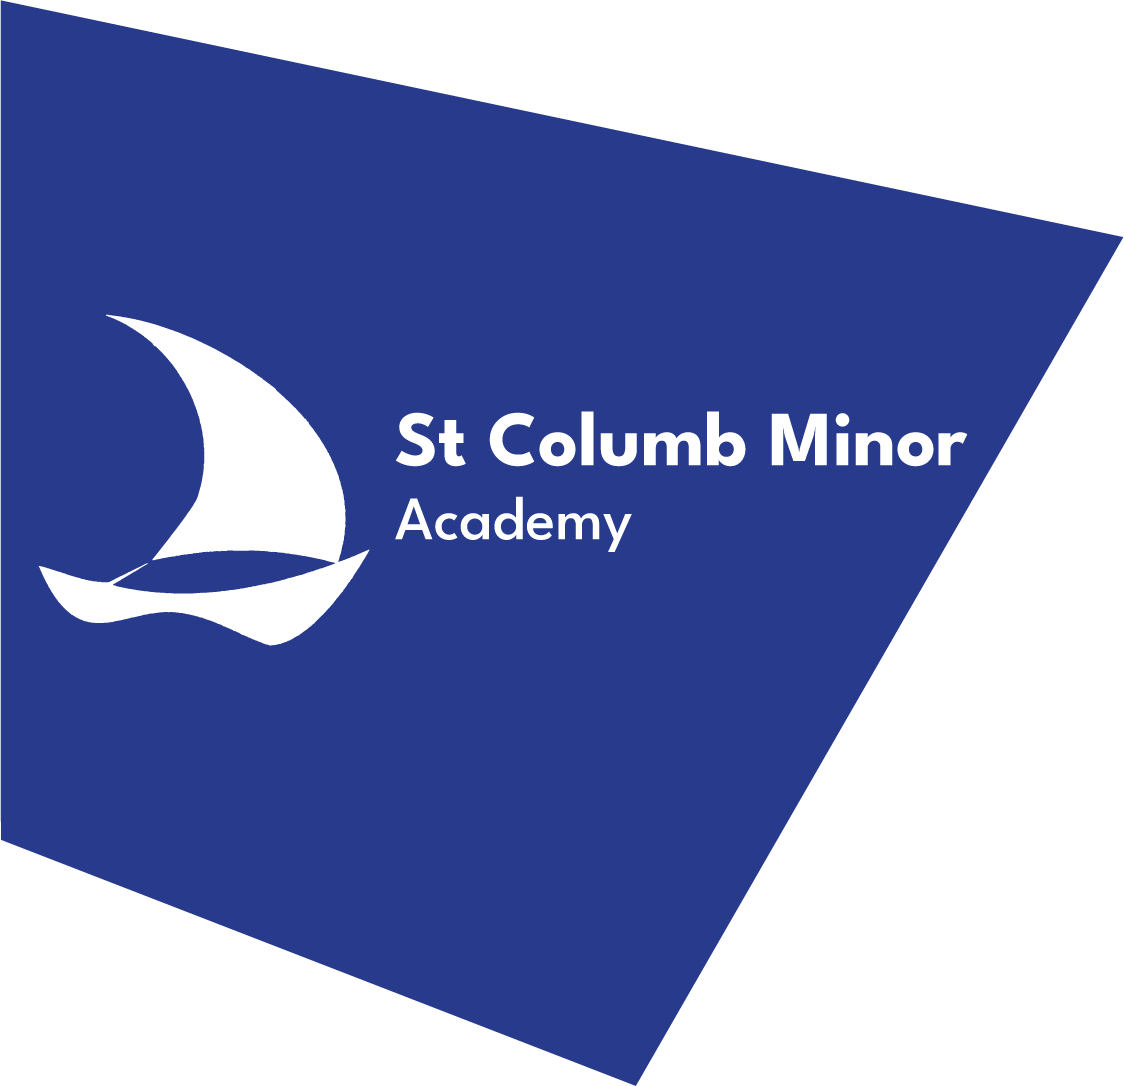 St Columb Minor Academy logo